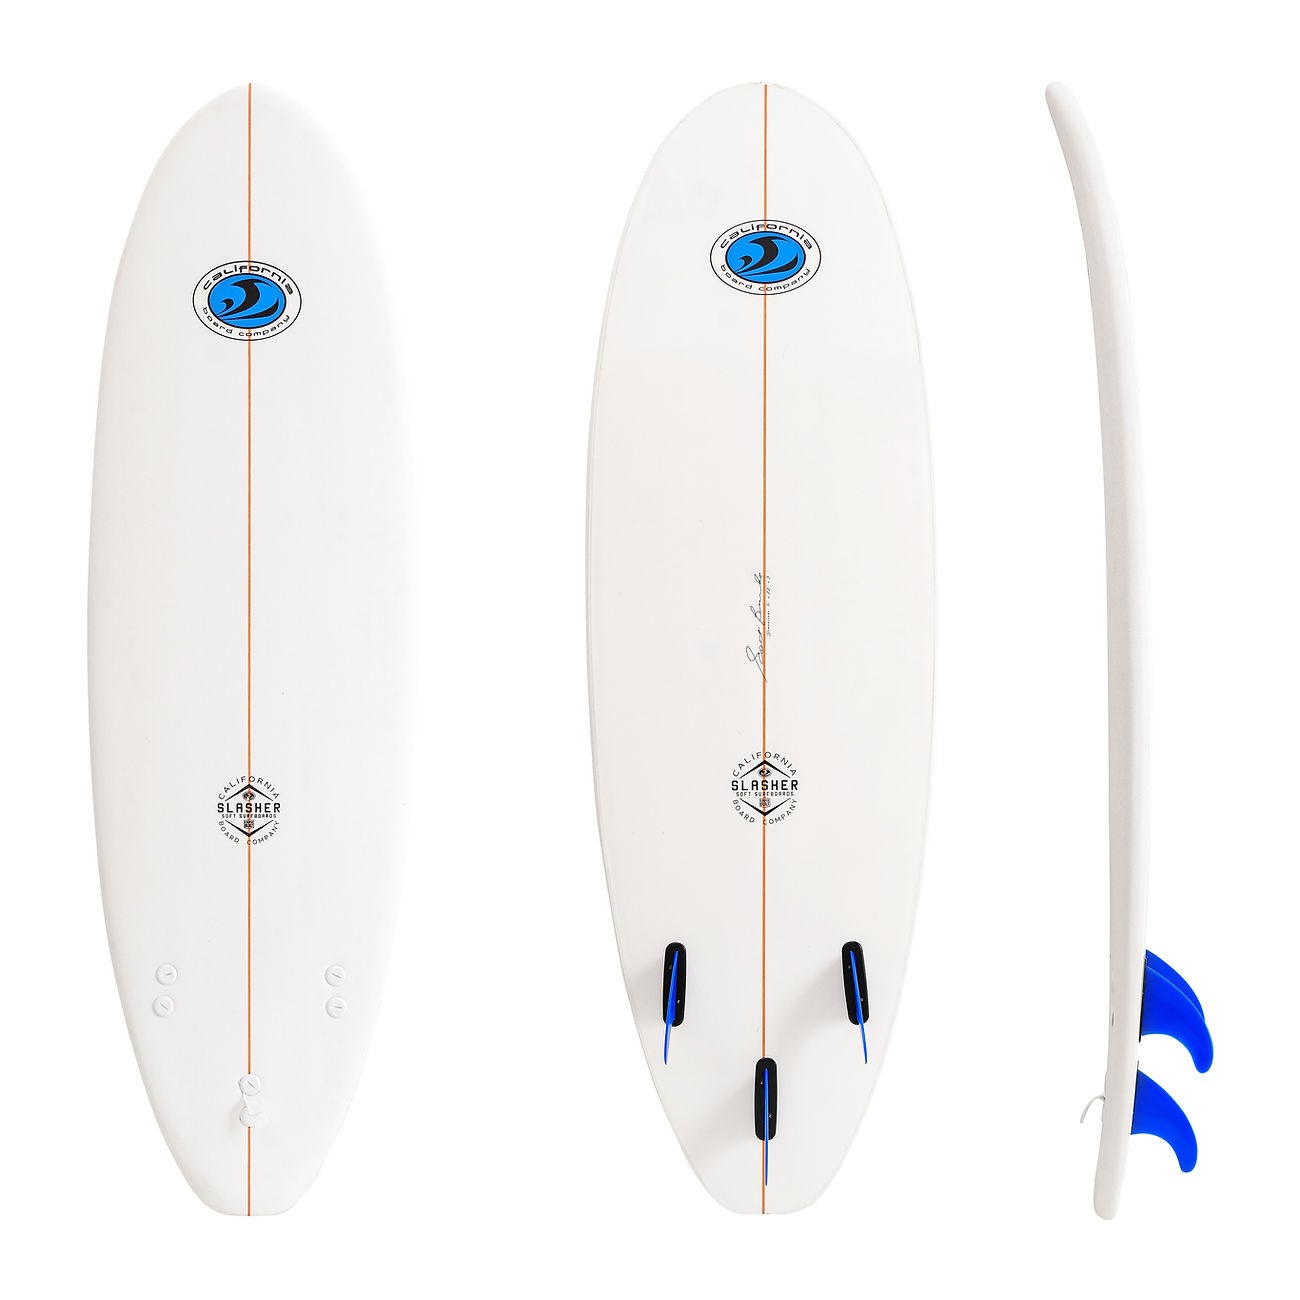 CBC - Foam Surfboard - Softboard Slasher 6'0 - White